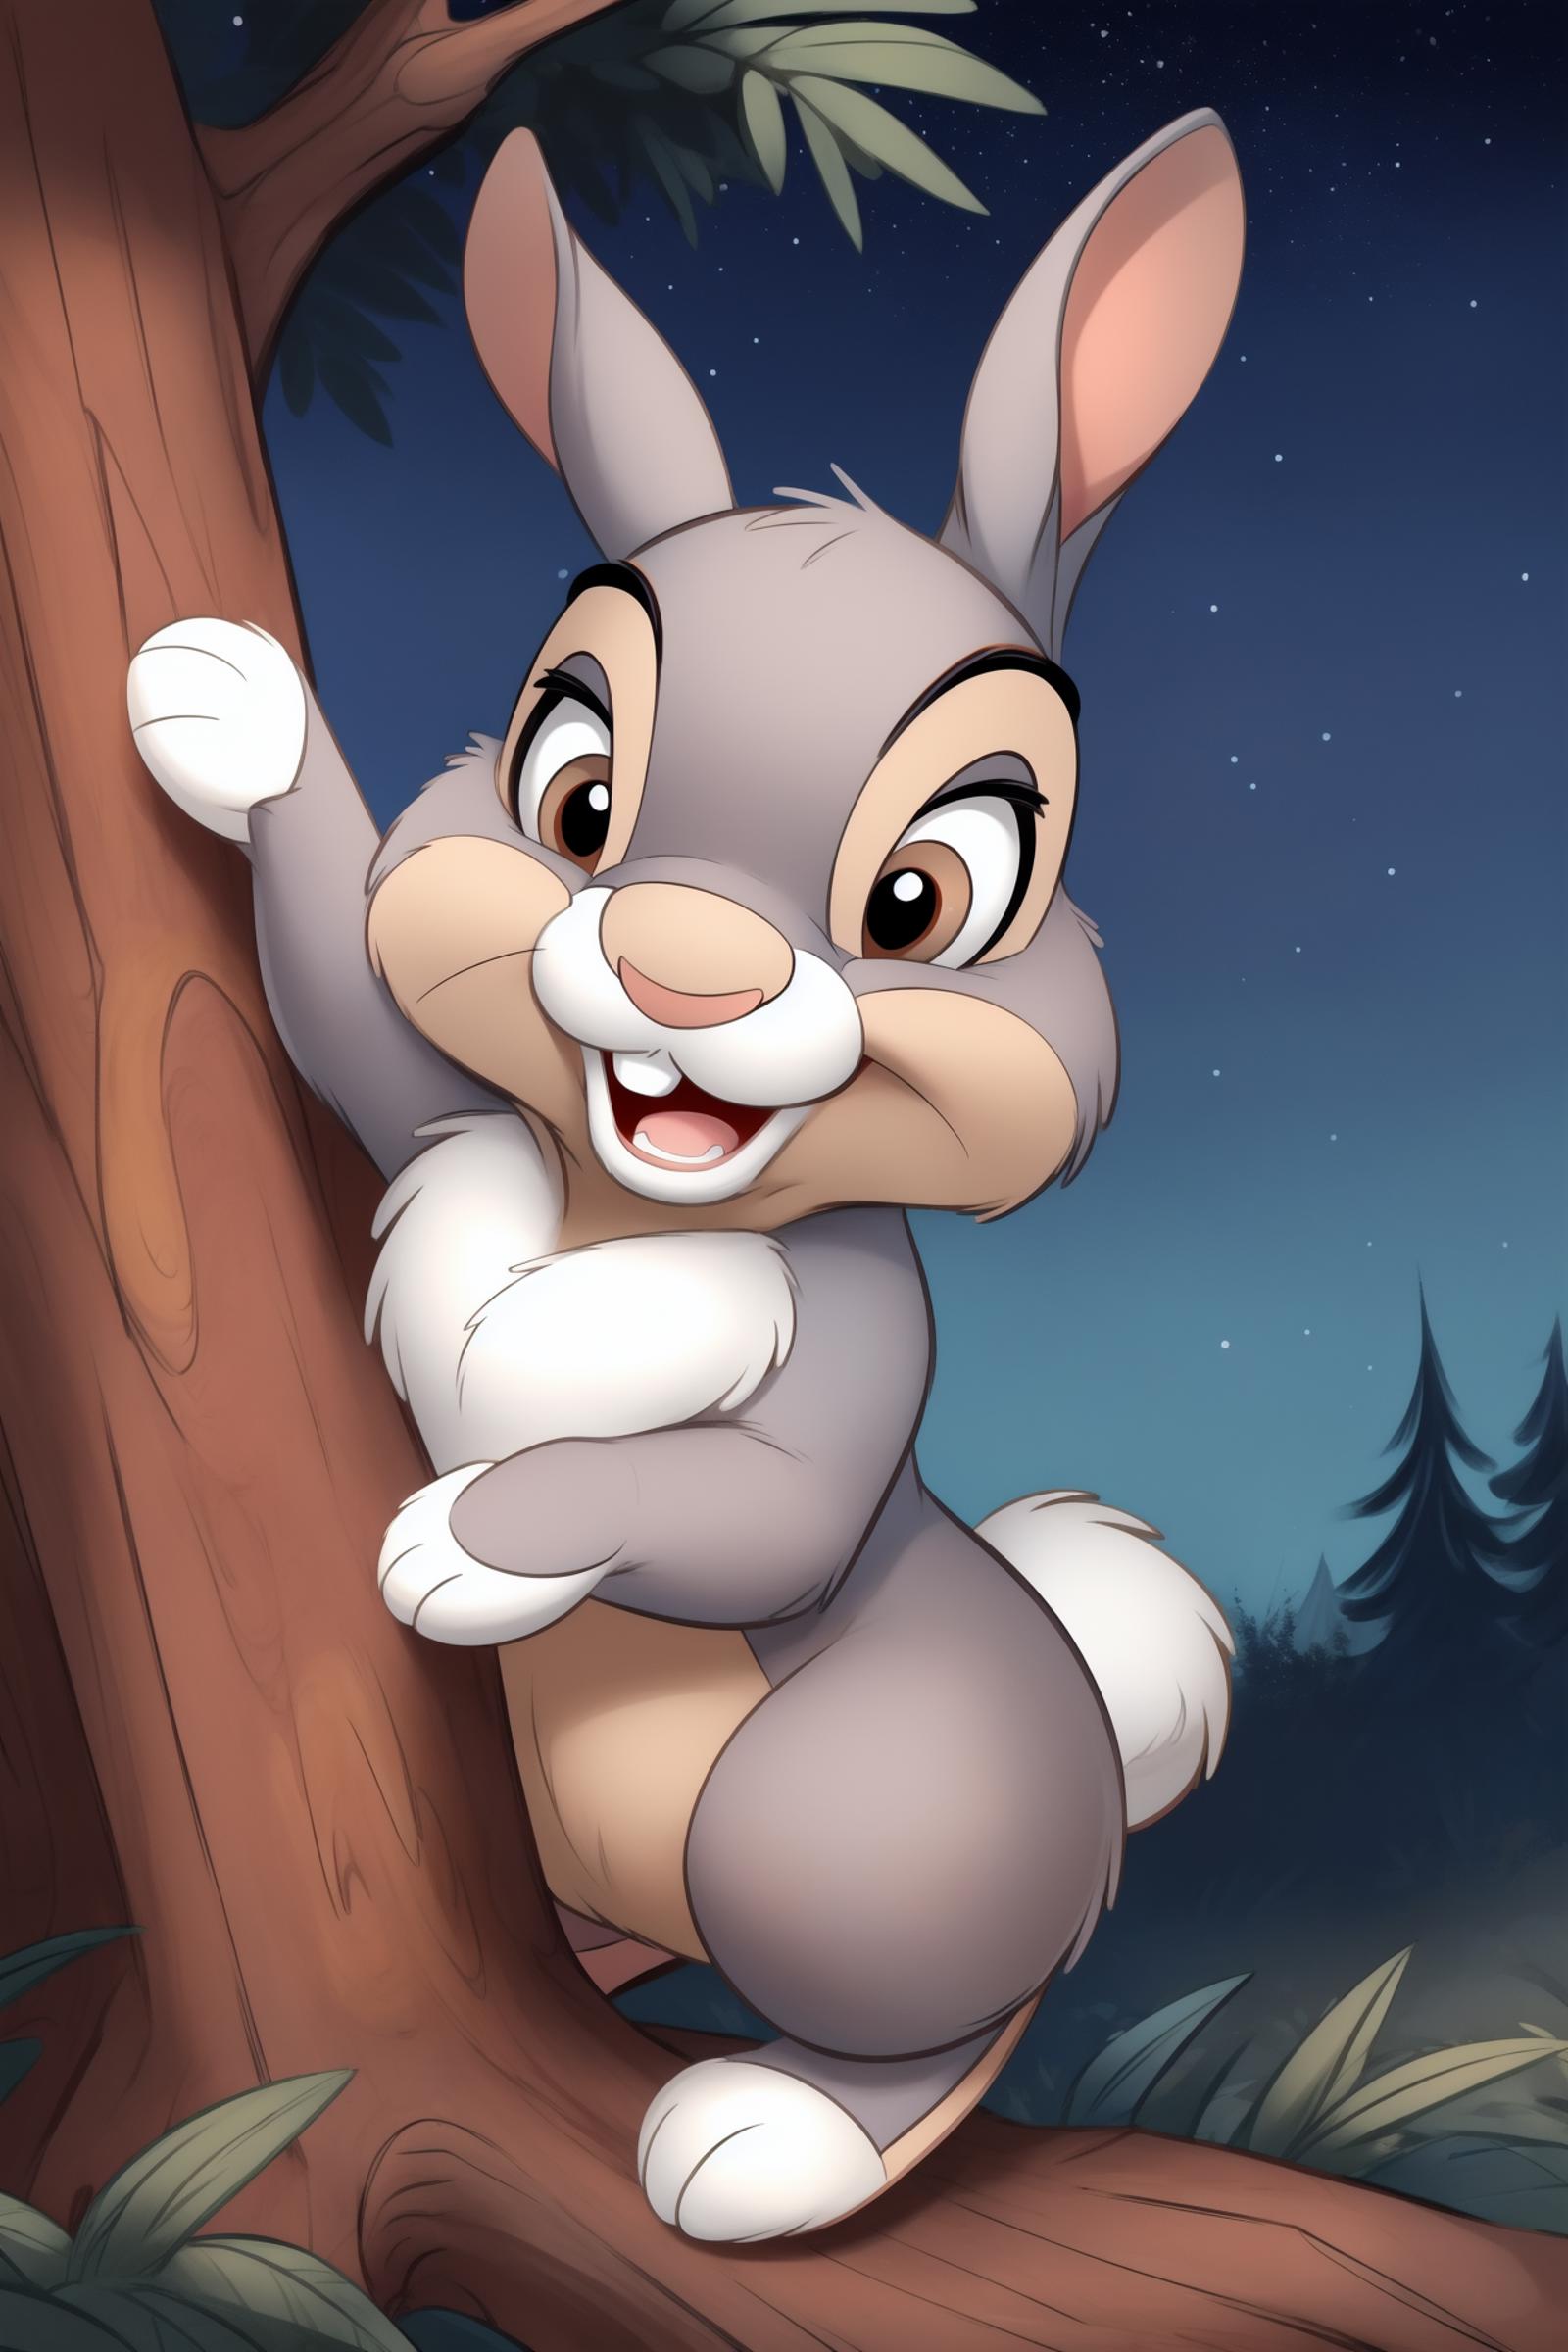 Thumper - Disney's Bambi image by LuckyDaWolf